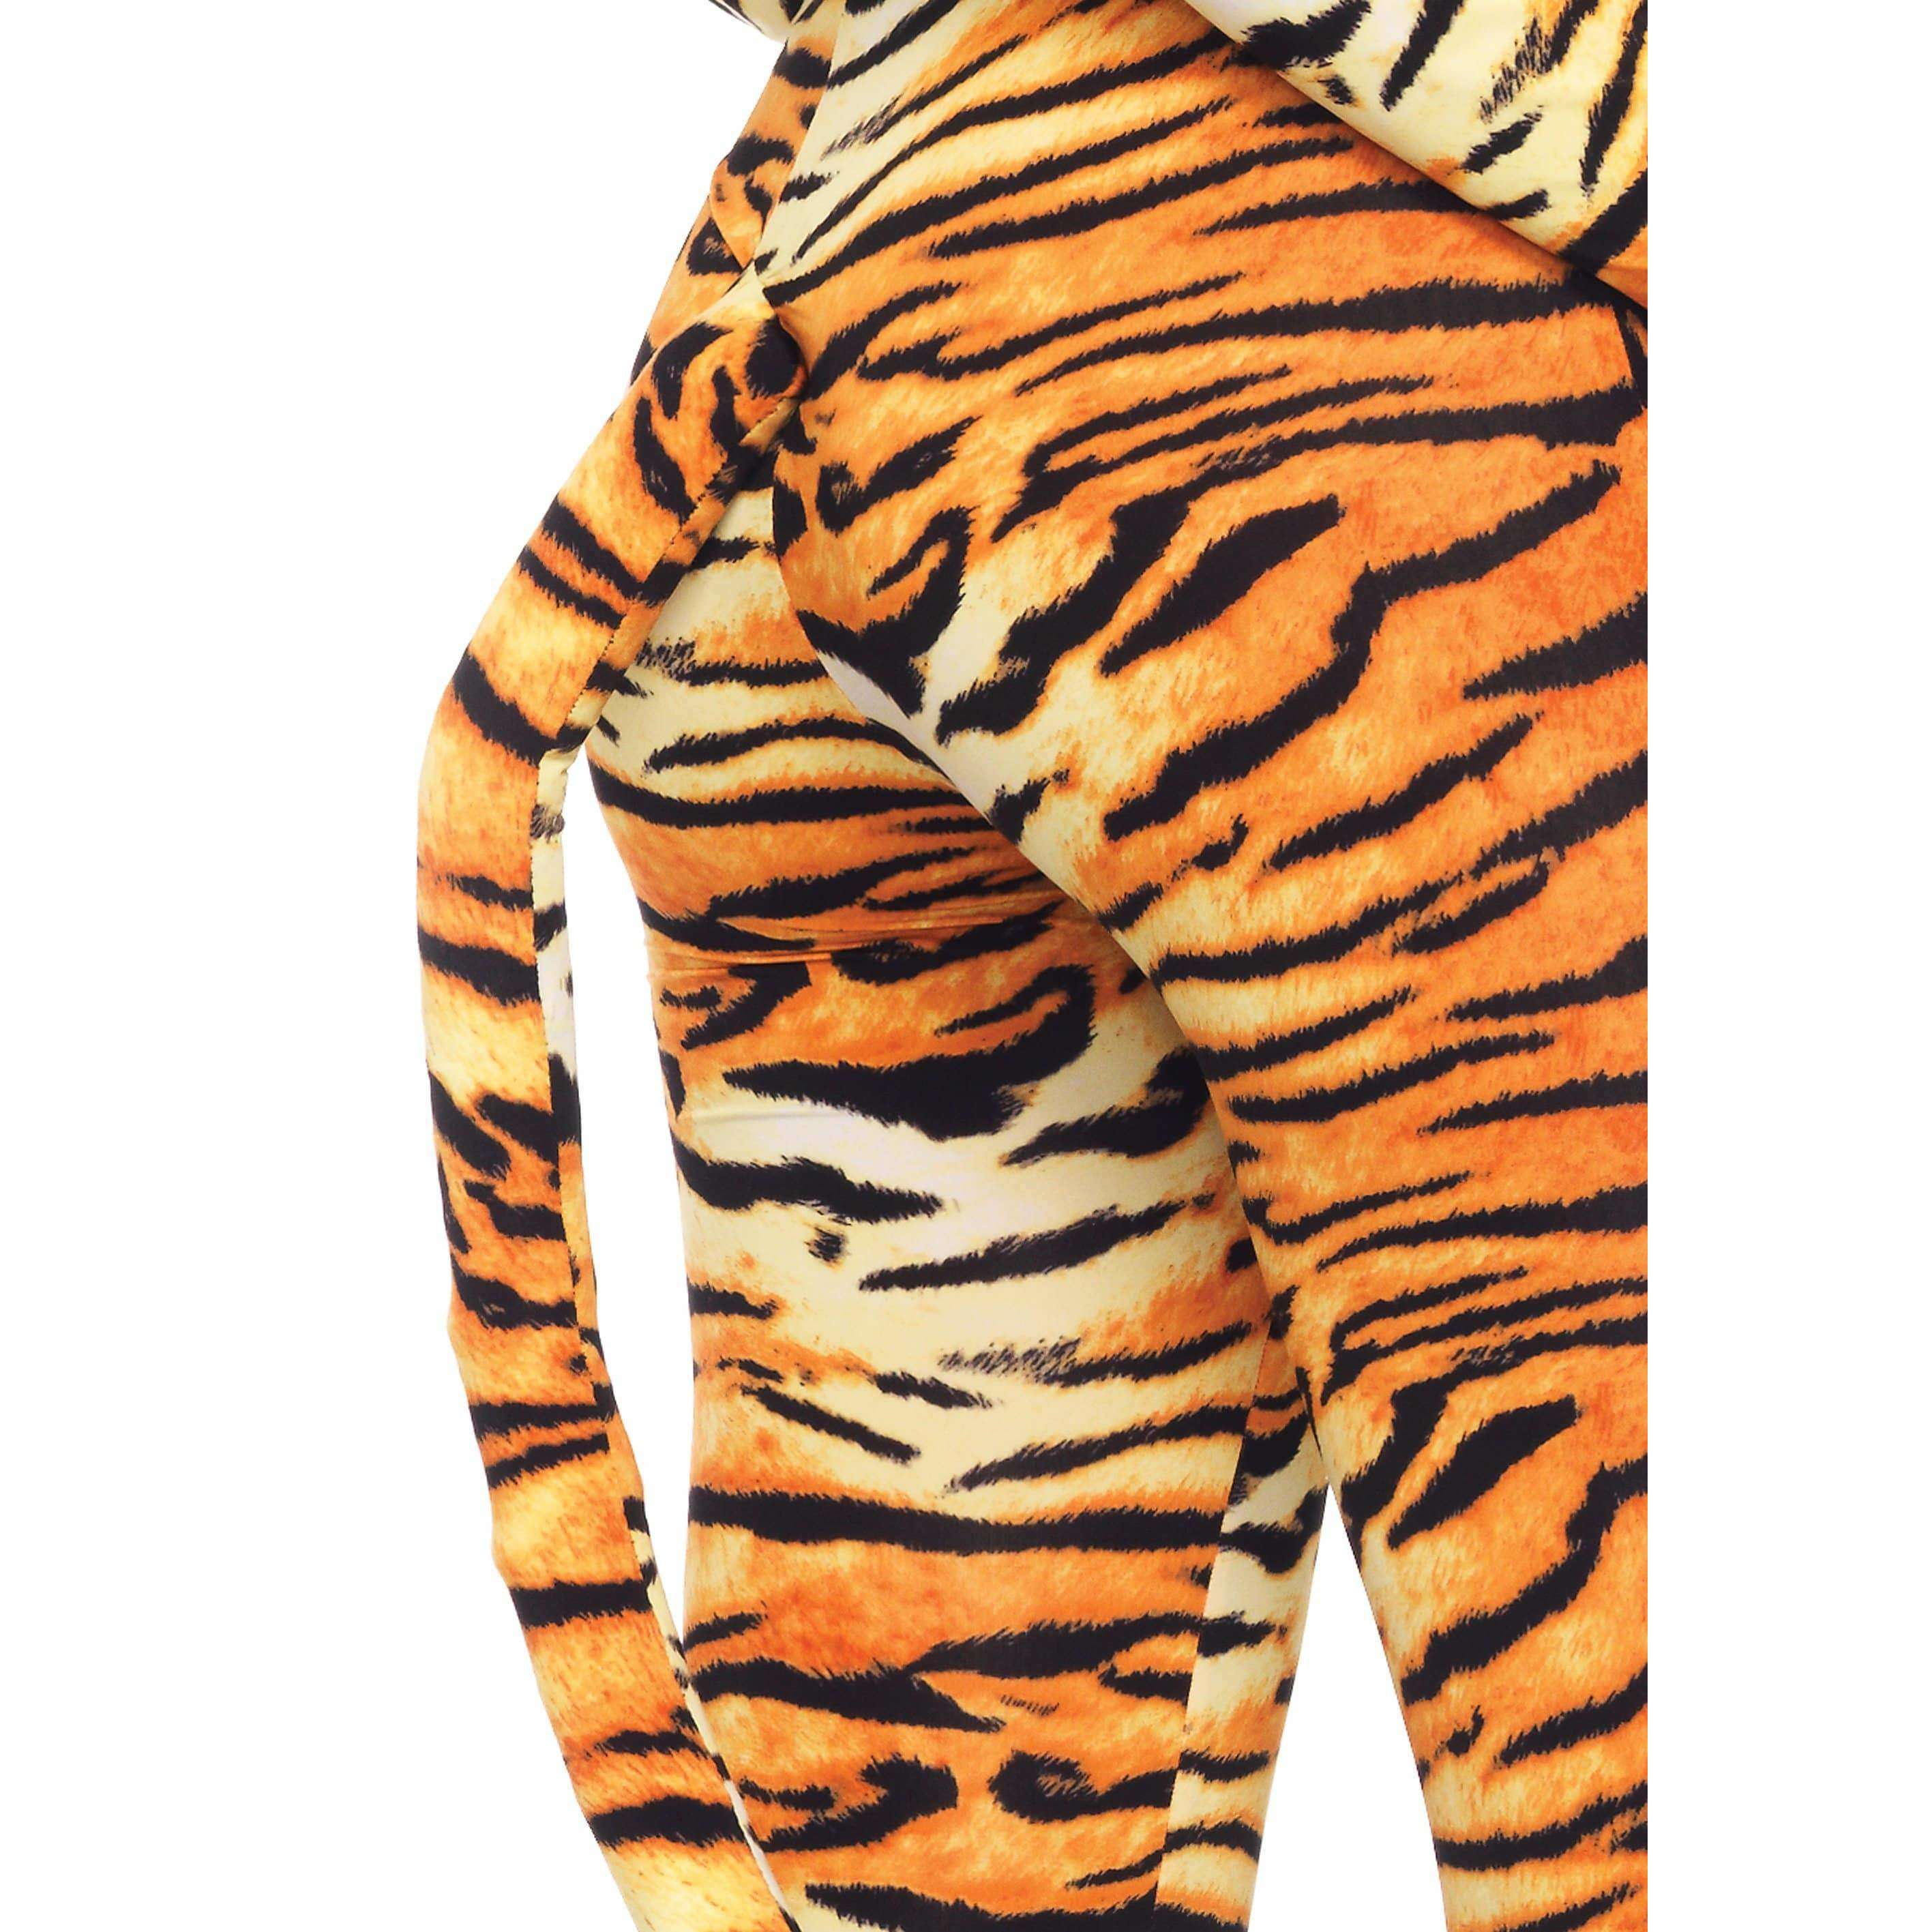 Sexy Wild Tigress 2pc Bodysuit Adult Costume